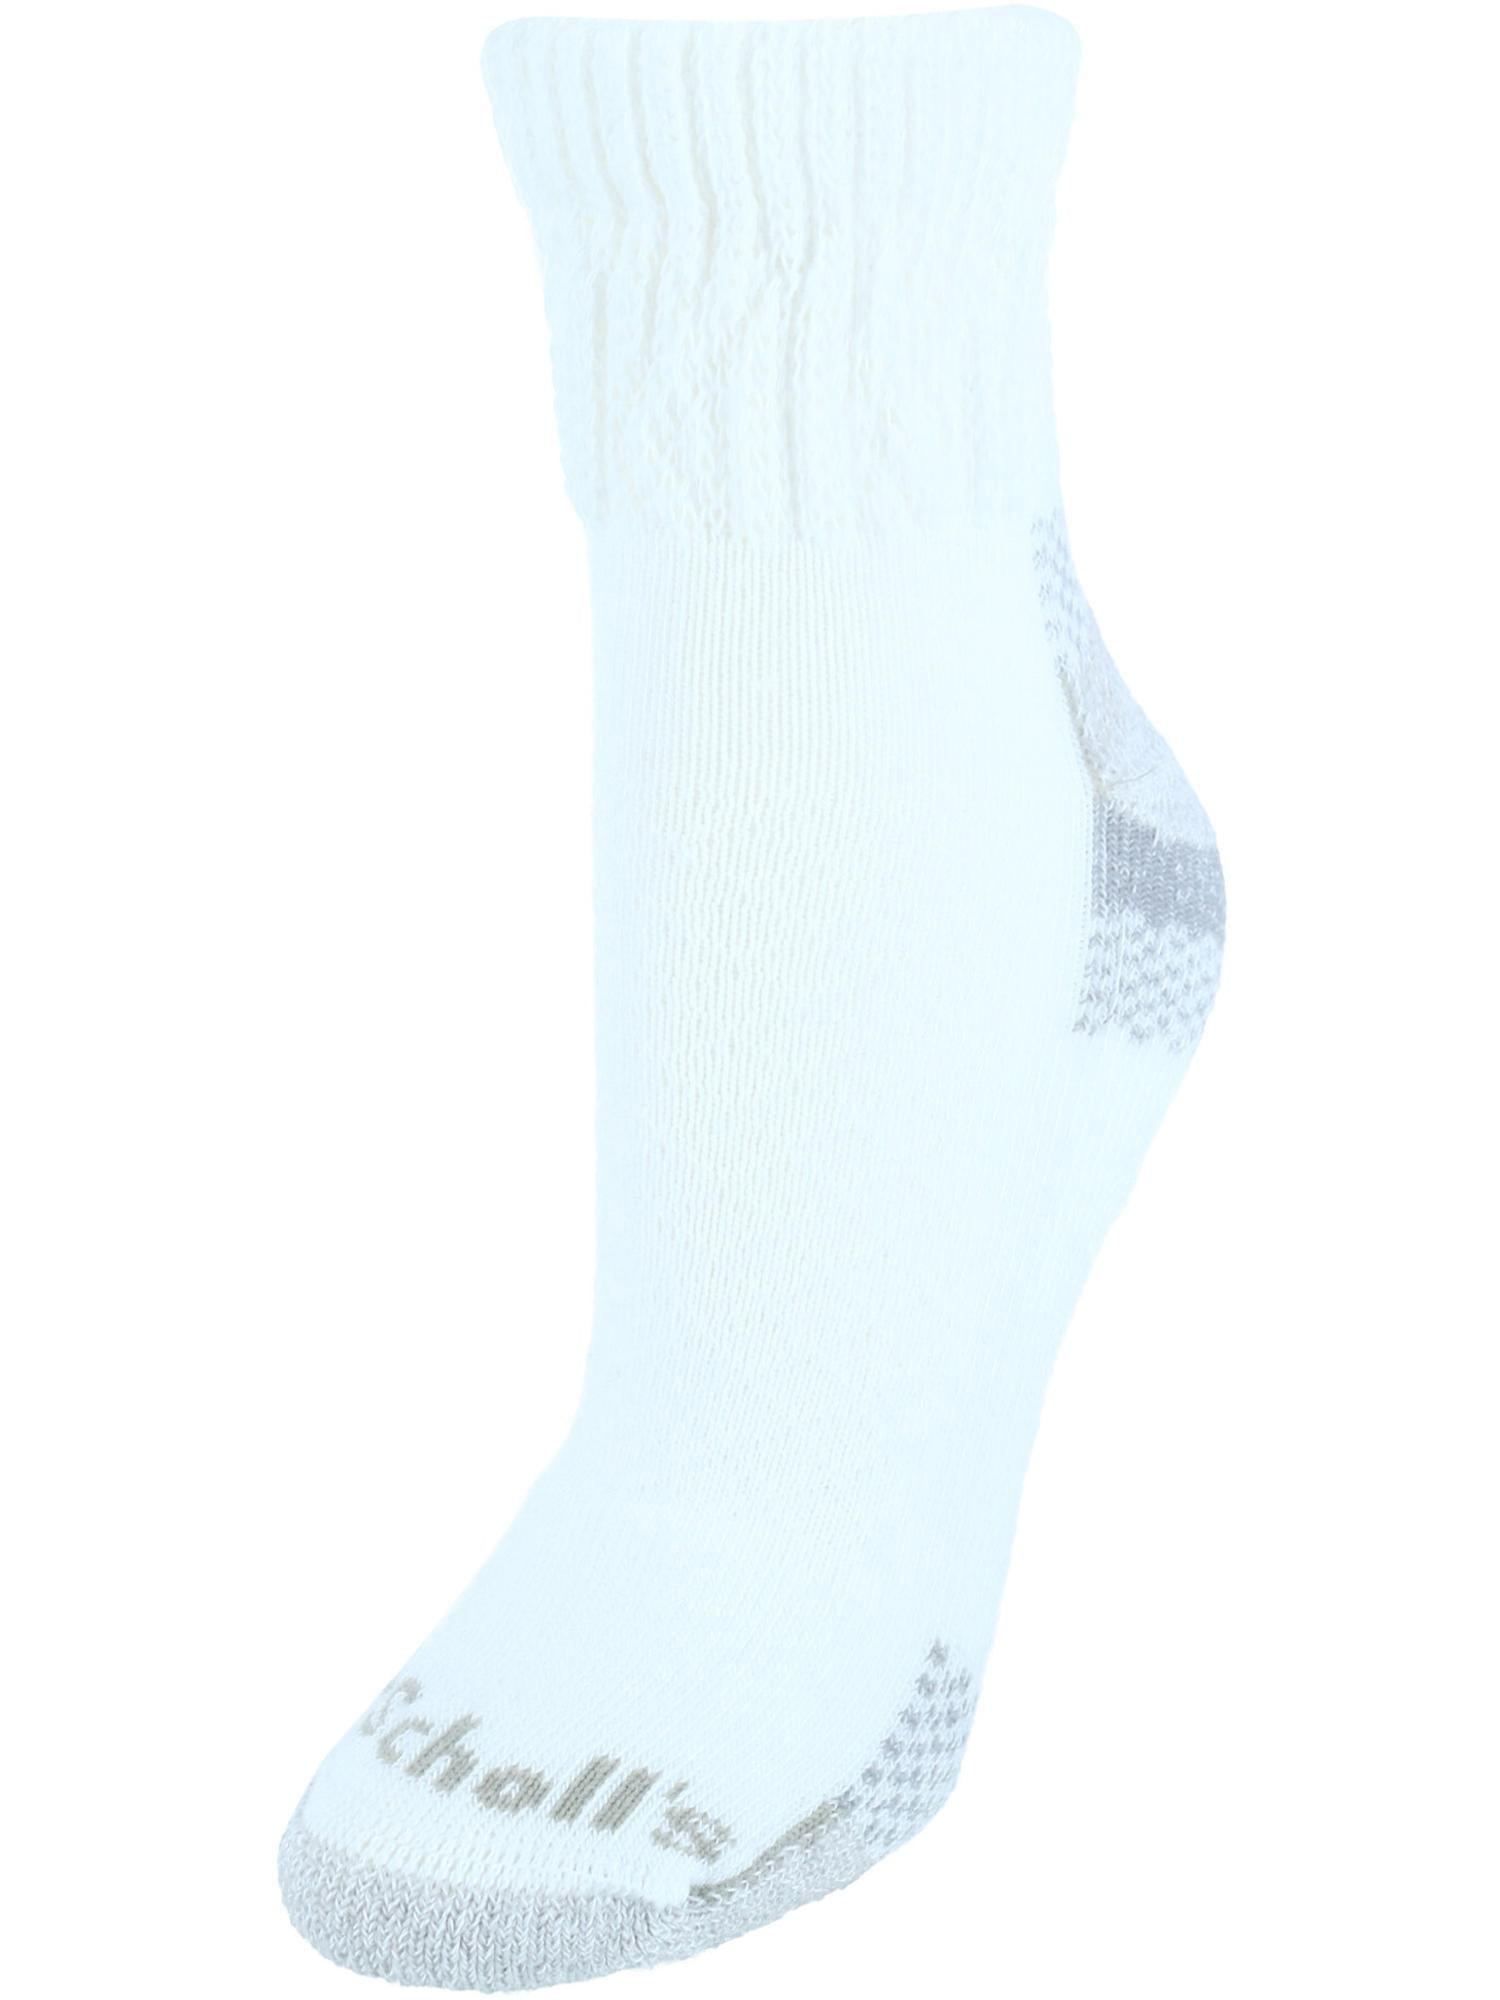 Dr Scholls Ankle Advanced Relief Socks (2 Pair Pack) (Women) - Walmart.com